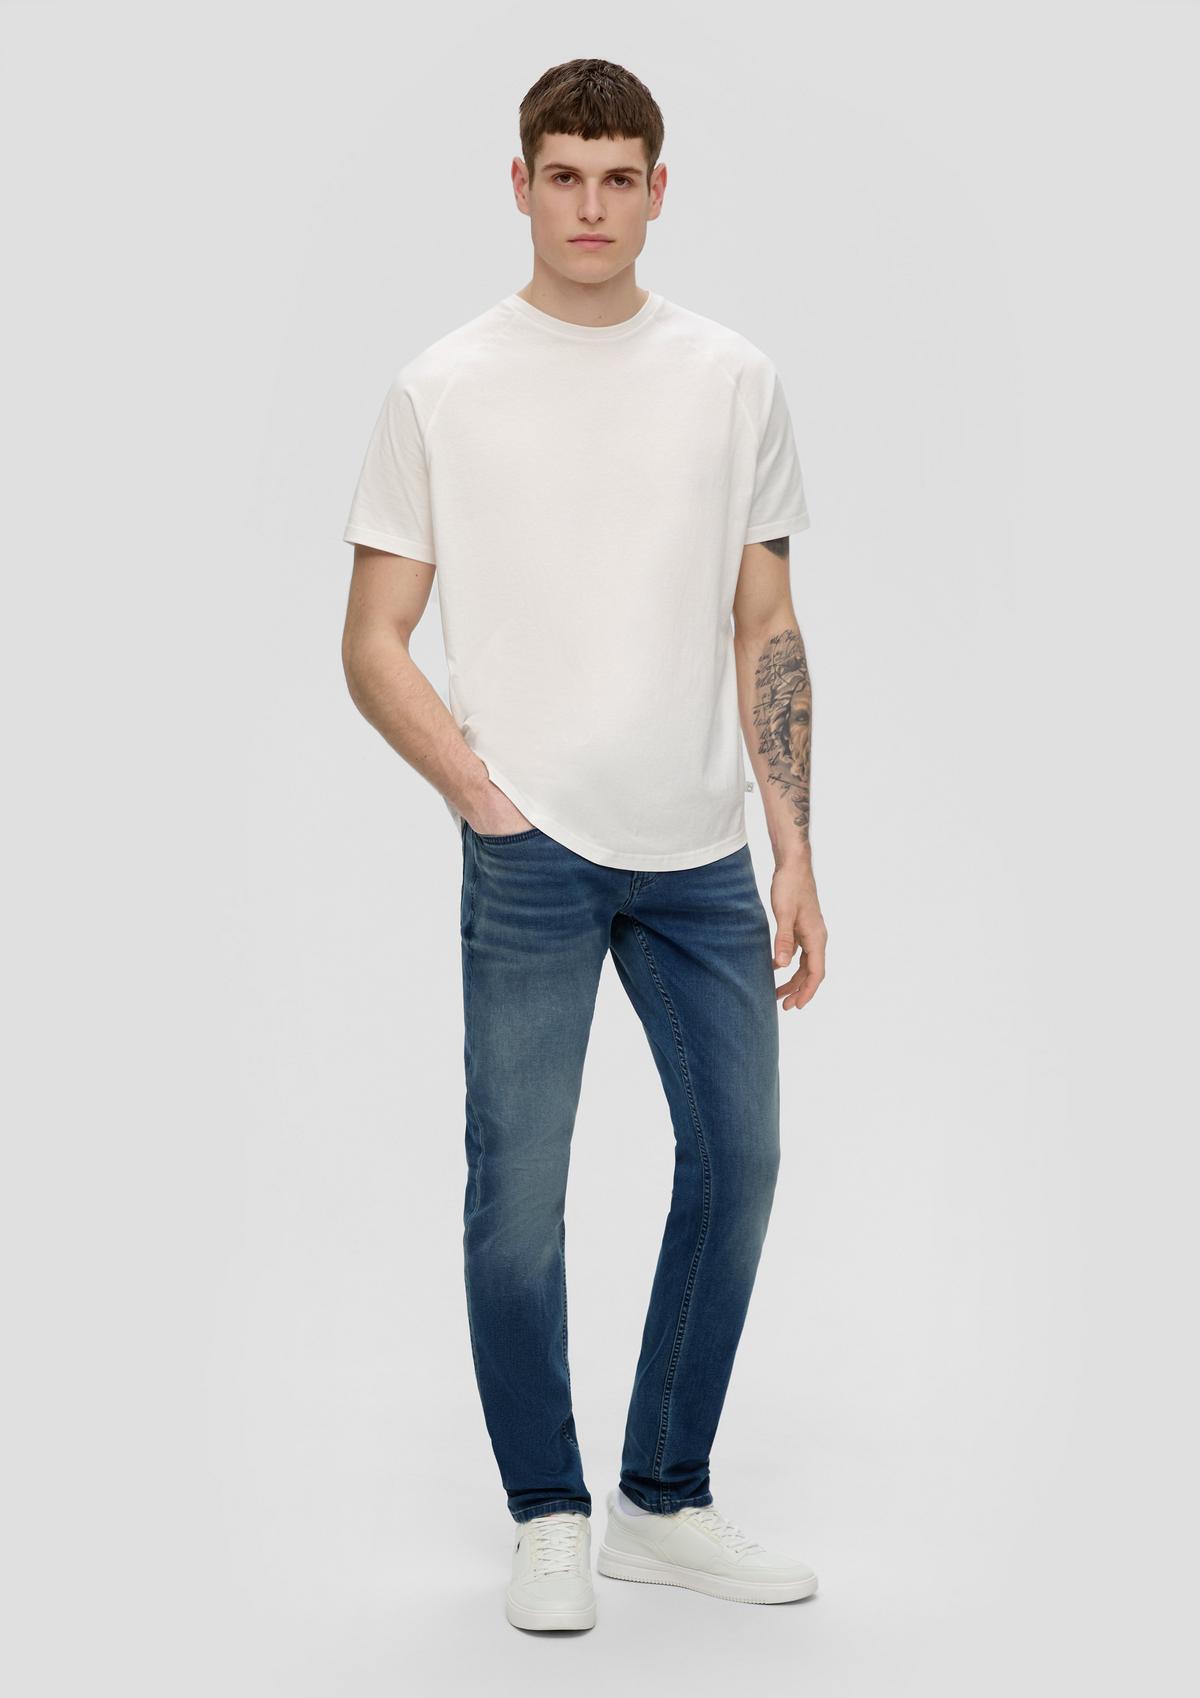 Rick jeans / slim fit / mid rise / slim leg